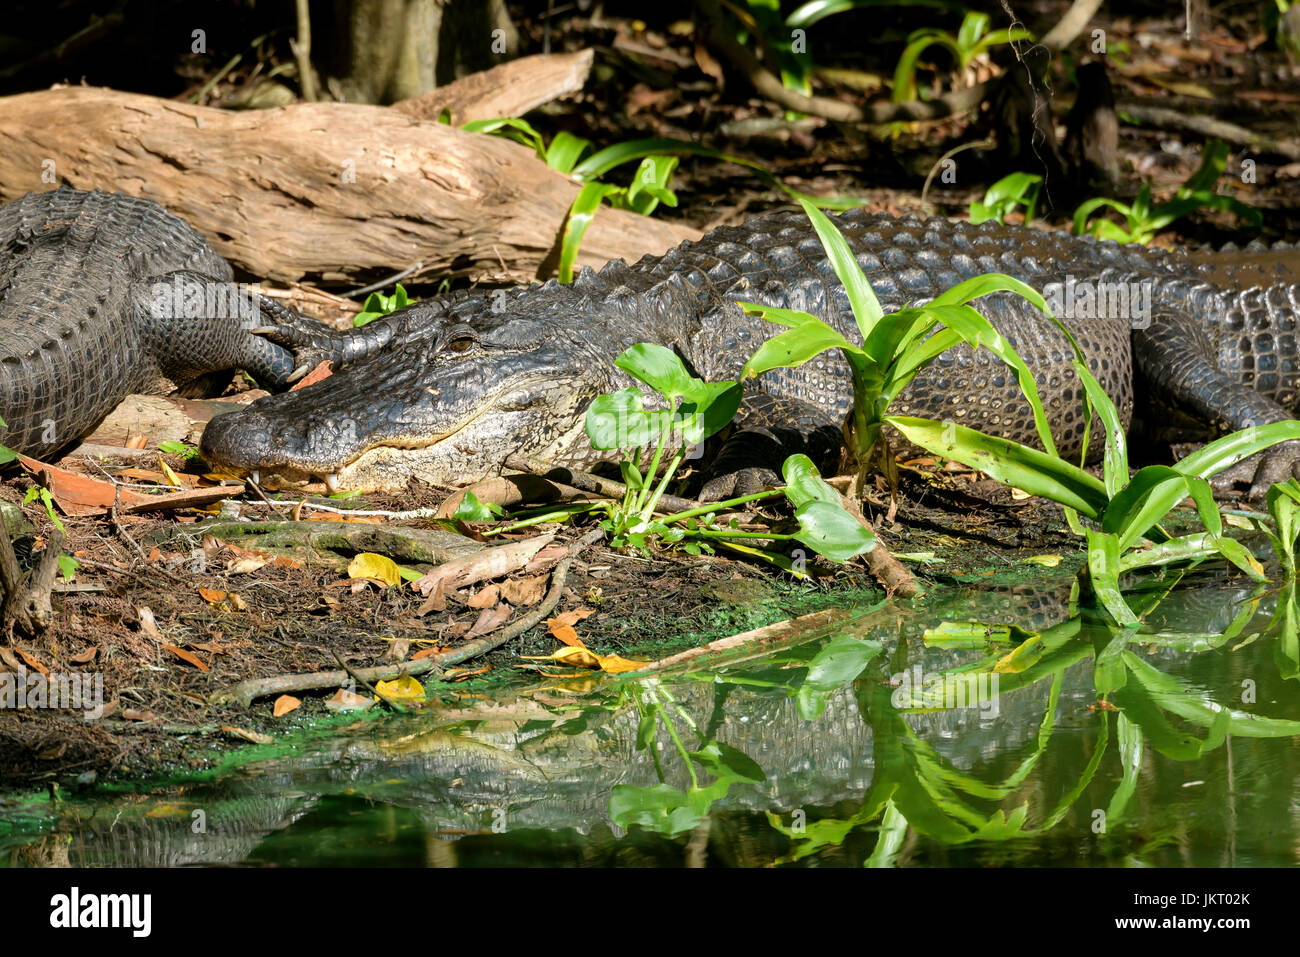 American alligators (Alligator mississippiensis) basking, Big Cypress Bend, Fakahatchee Strand, Florida, USA Stock Photo